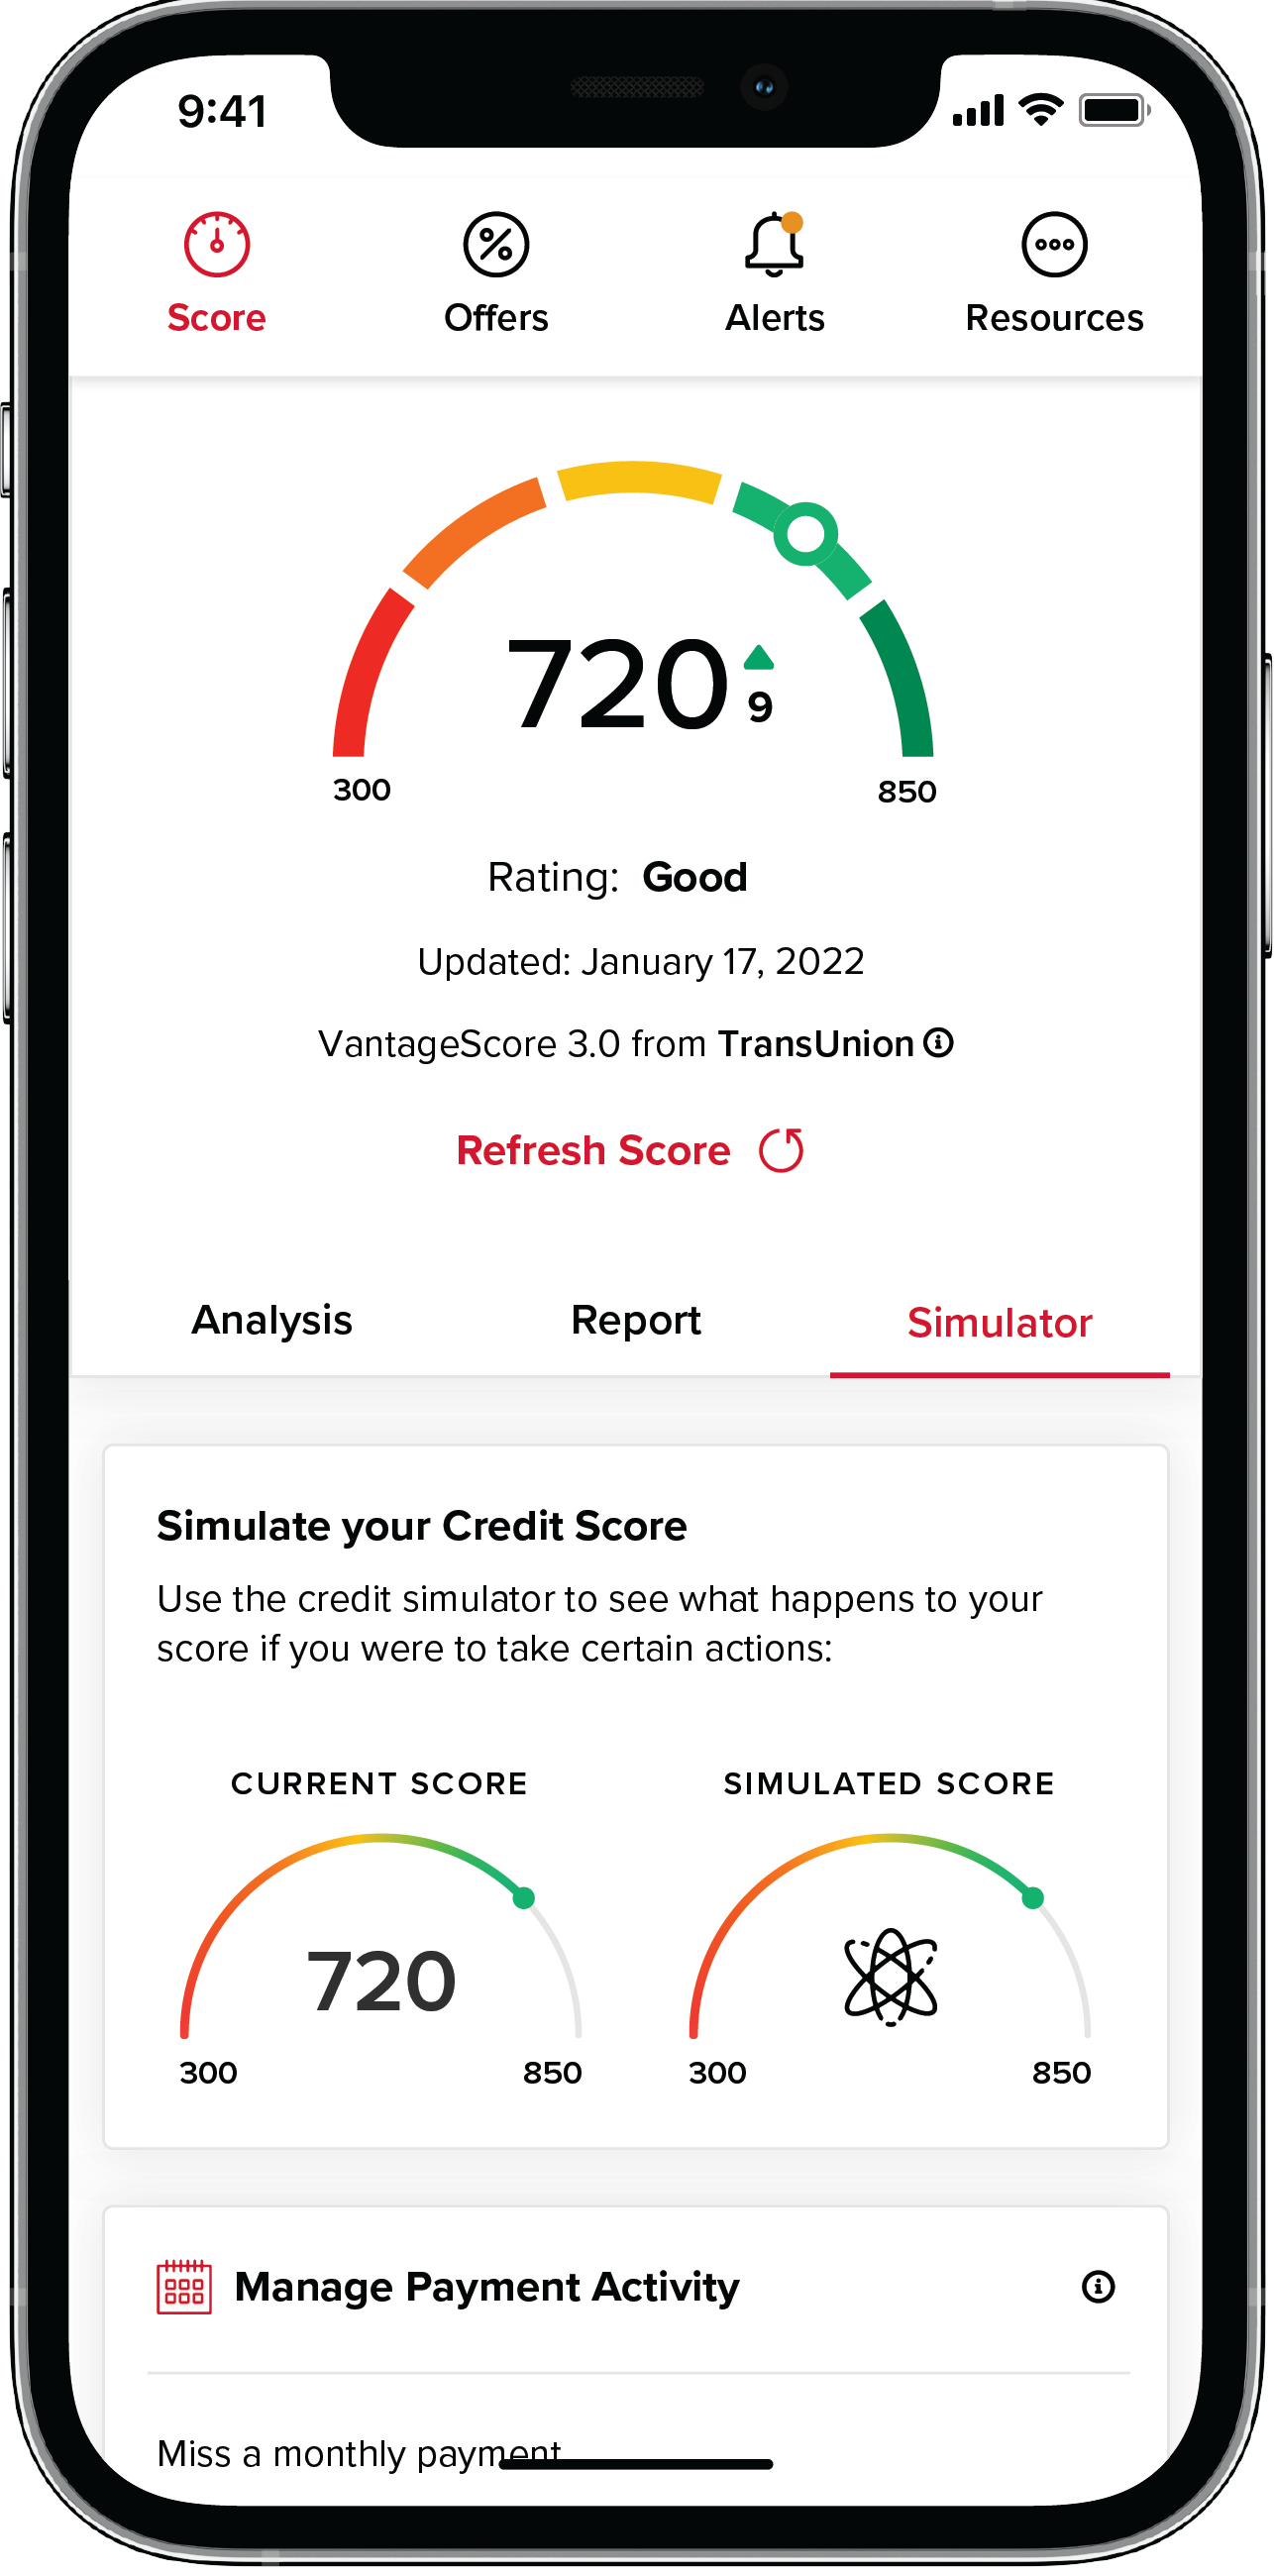 Screen View of Credit Score Tool